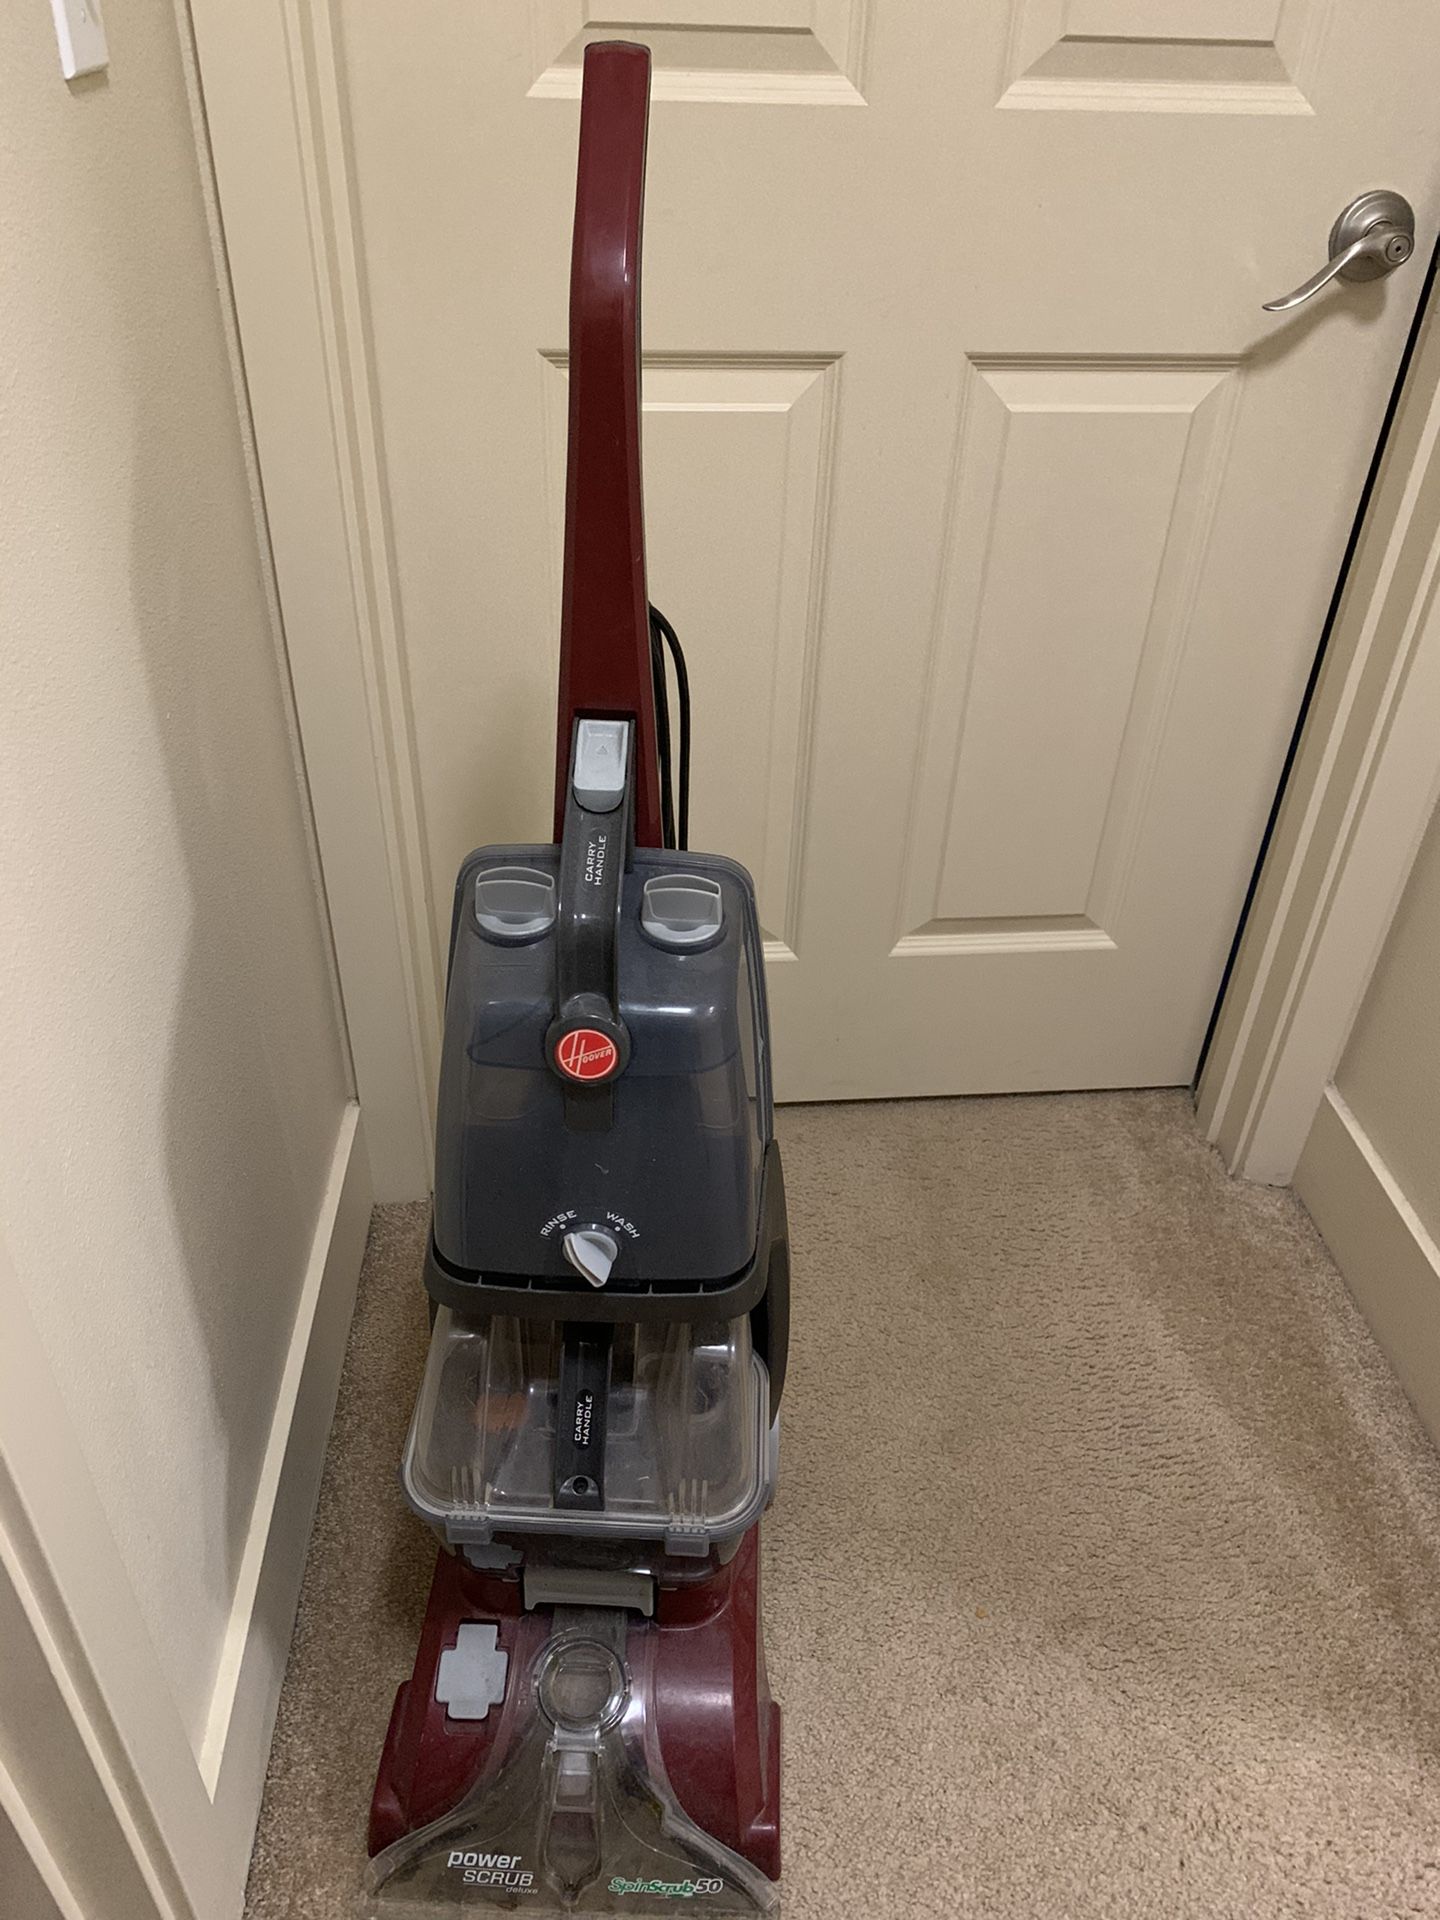 Hoover power scrub deluxe vacuum cleaner